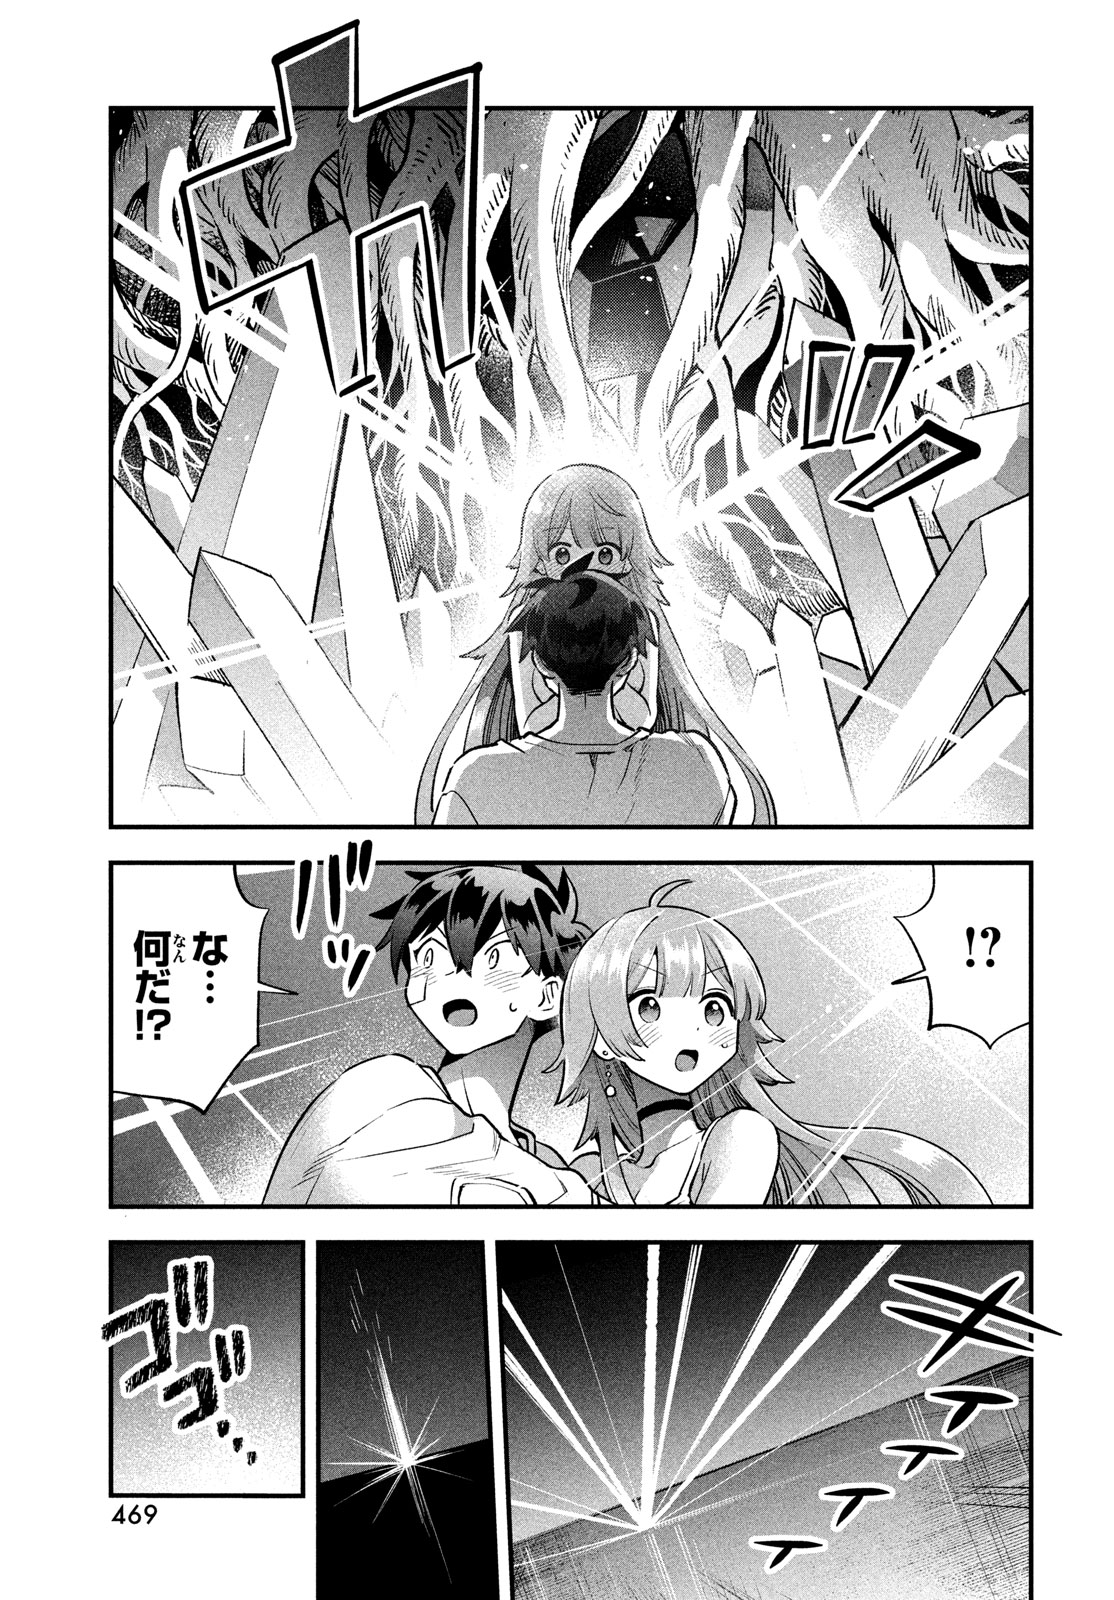 7-nin no Nemuri Hime - Chapter 51 - Page 13